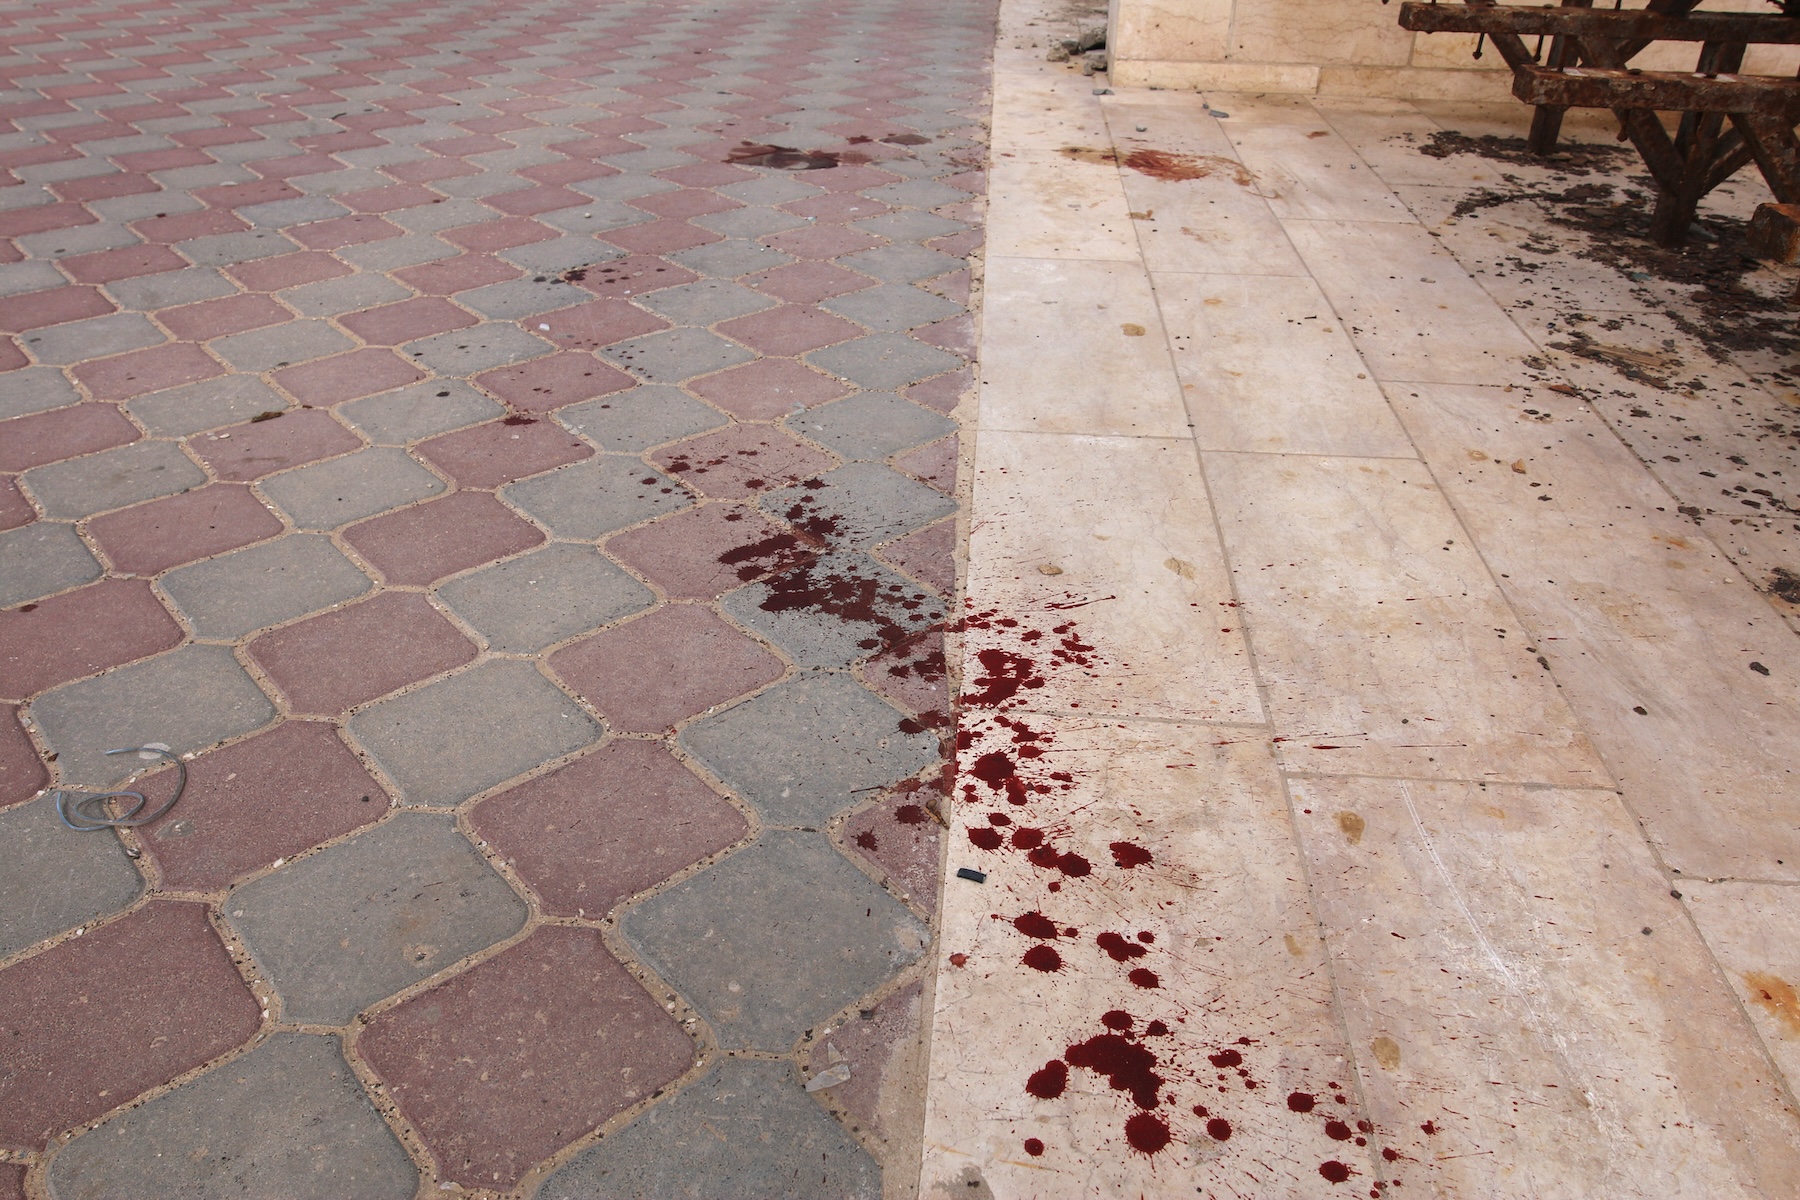 gaza israel al shifa hospital executions blood civilians